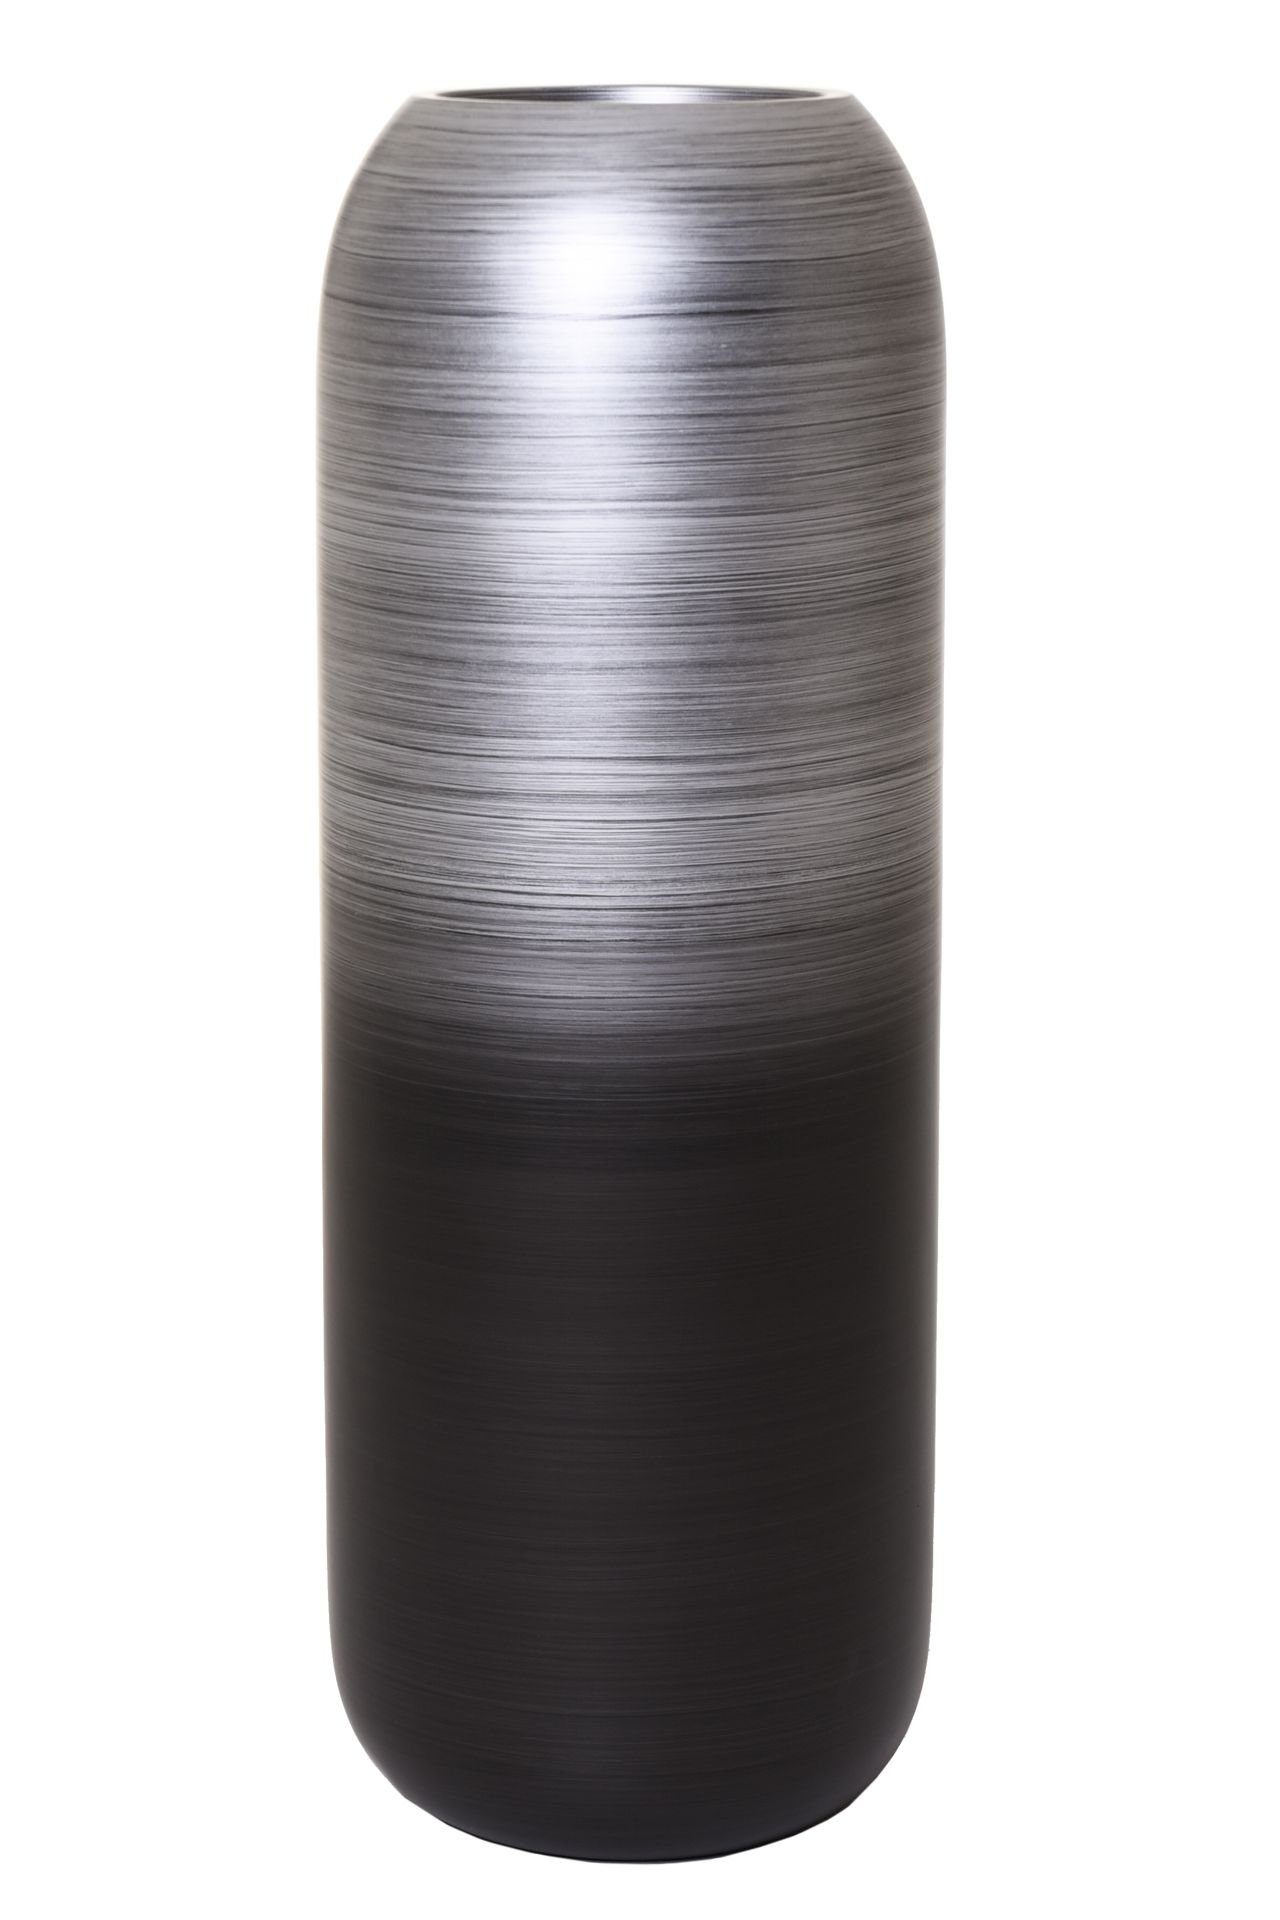 VIVANNO Bodenvase Bodenvase Pflanzkübel Schwarz Schwarz-Silber - Fiberglas CHRONO Seidenmatt Silber